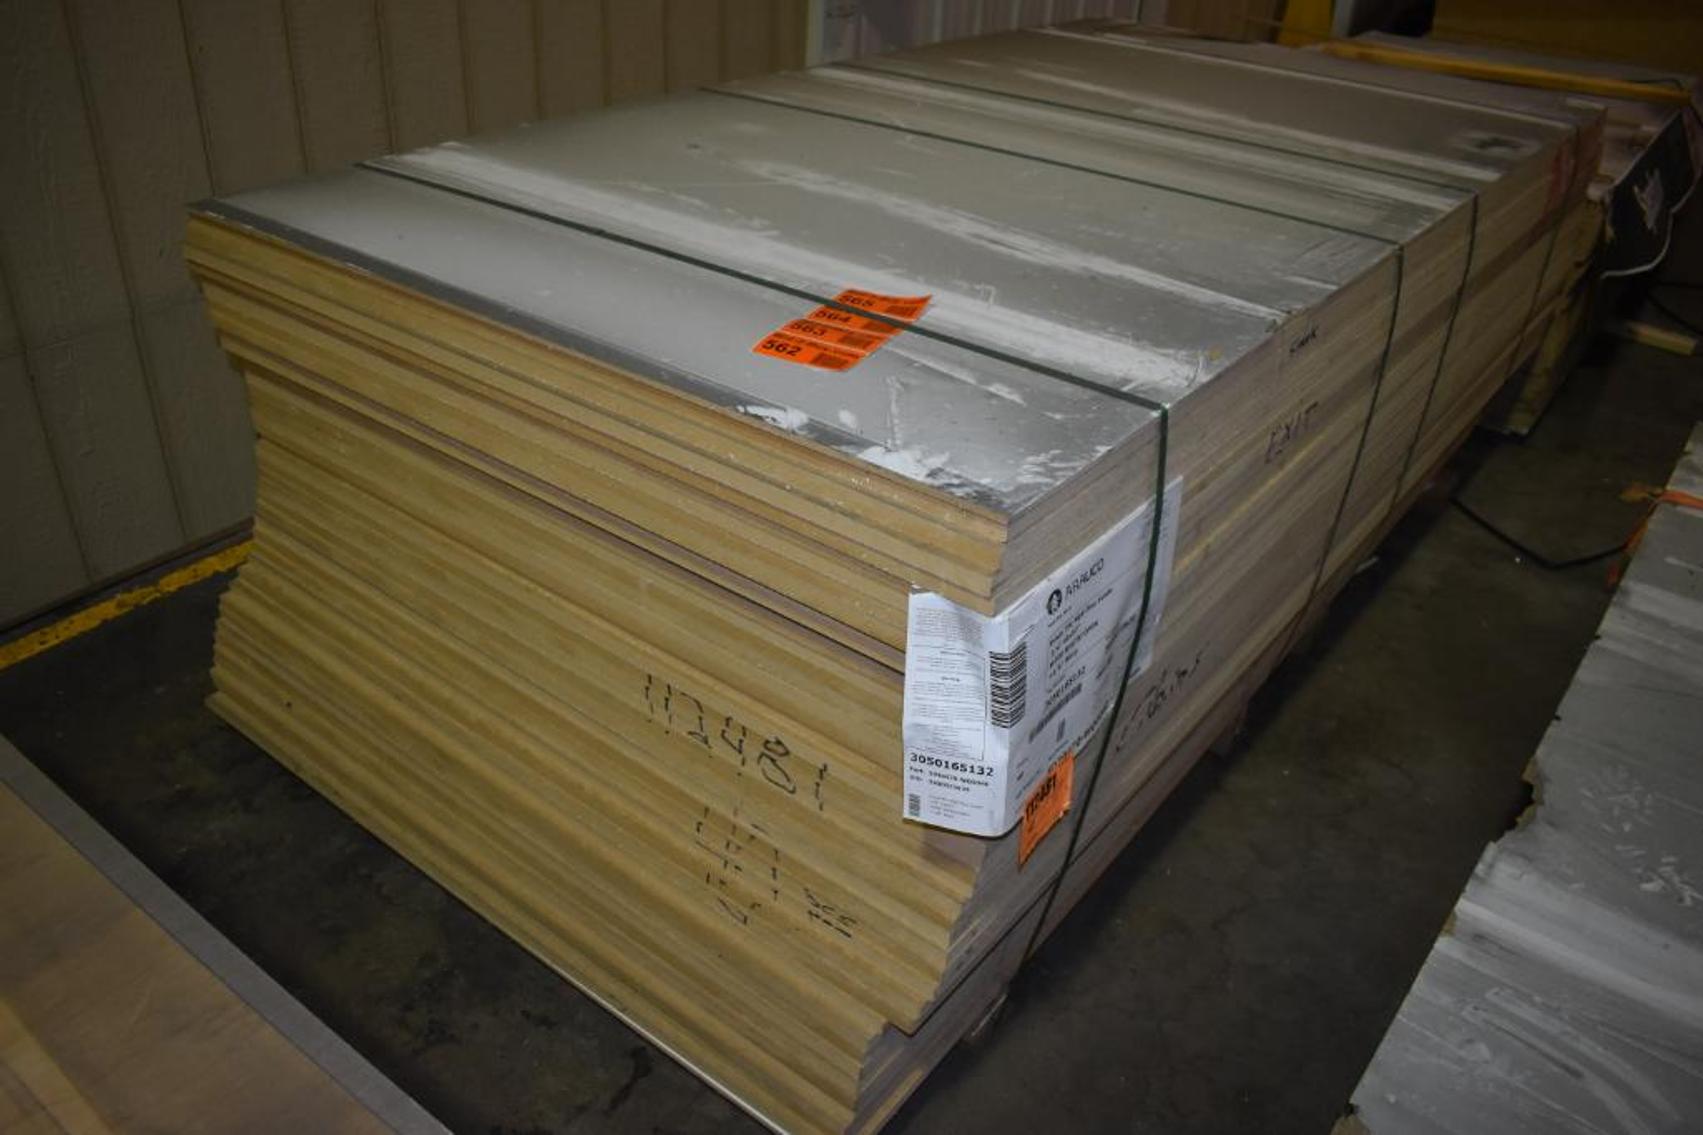 Hydro 3200 SCMI Table Saw, Cabinet Grade & Building Material